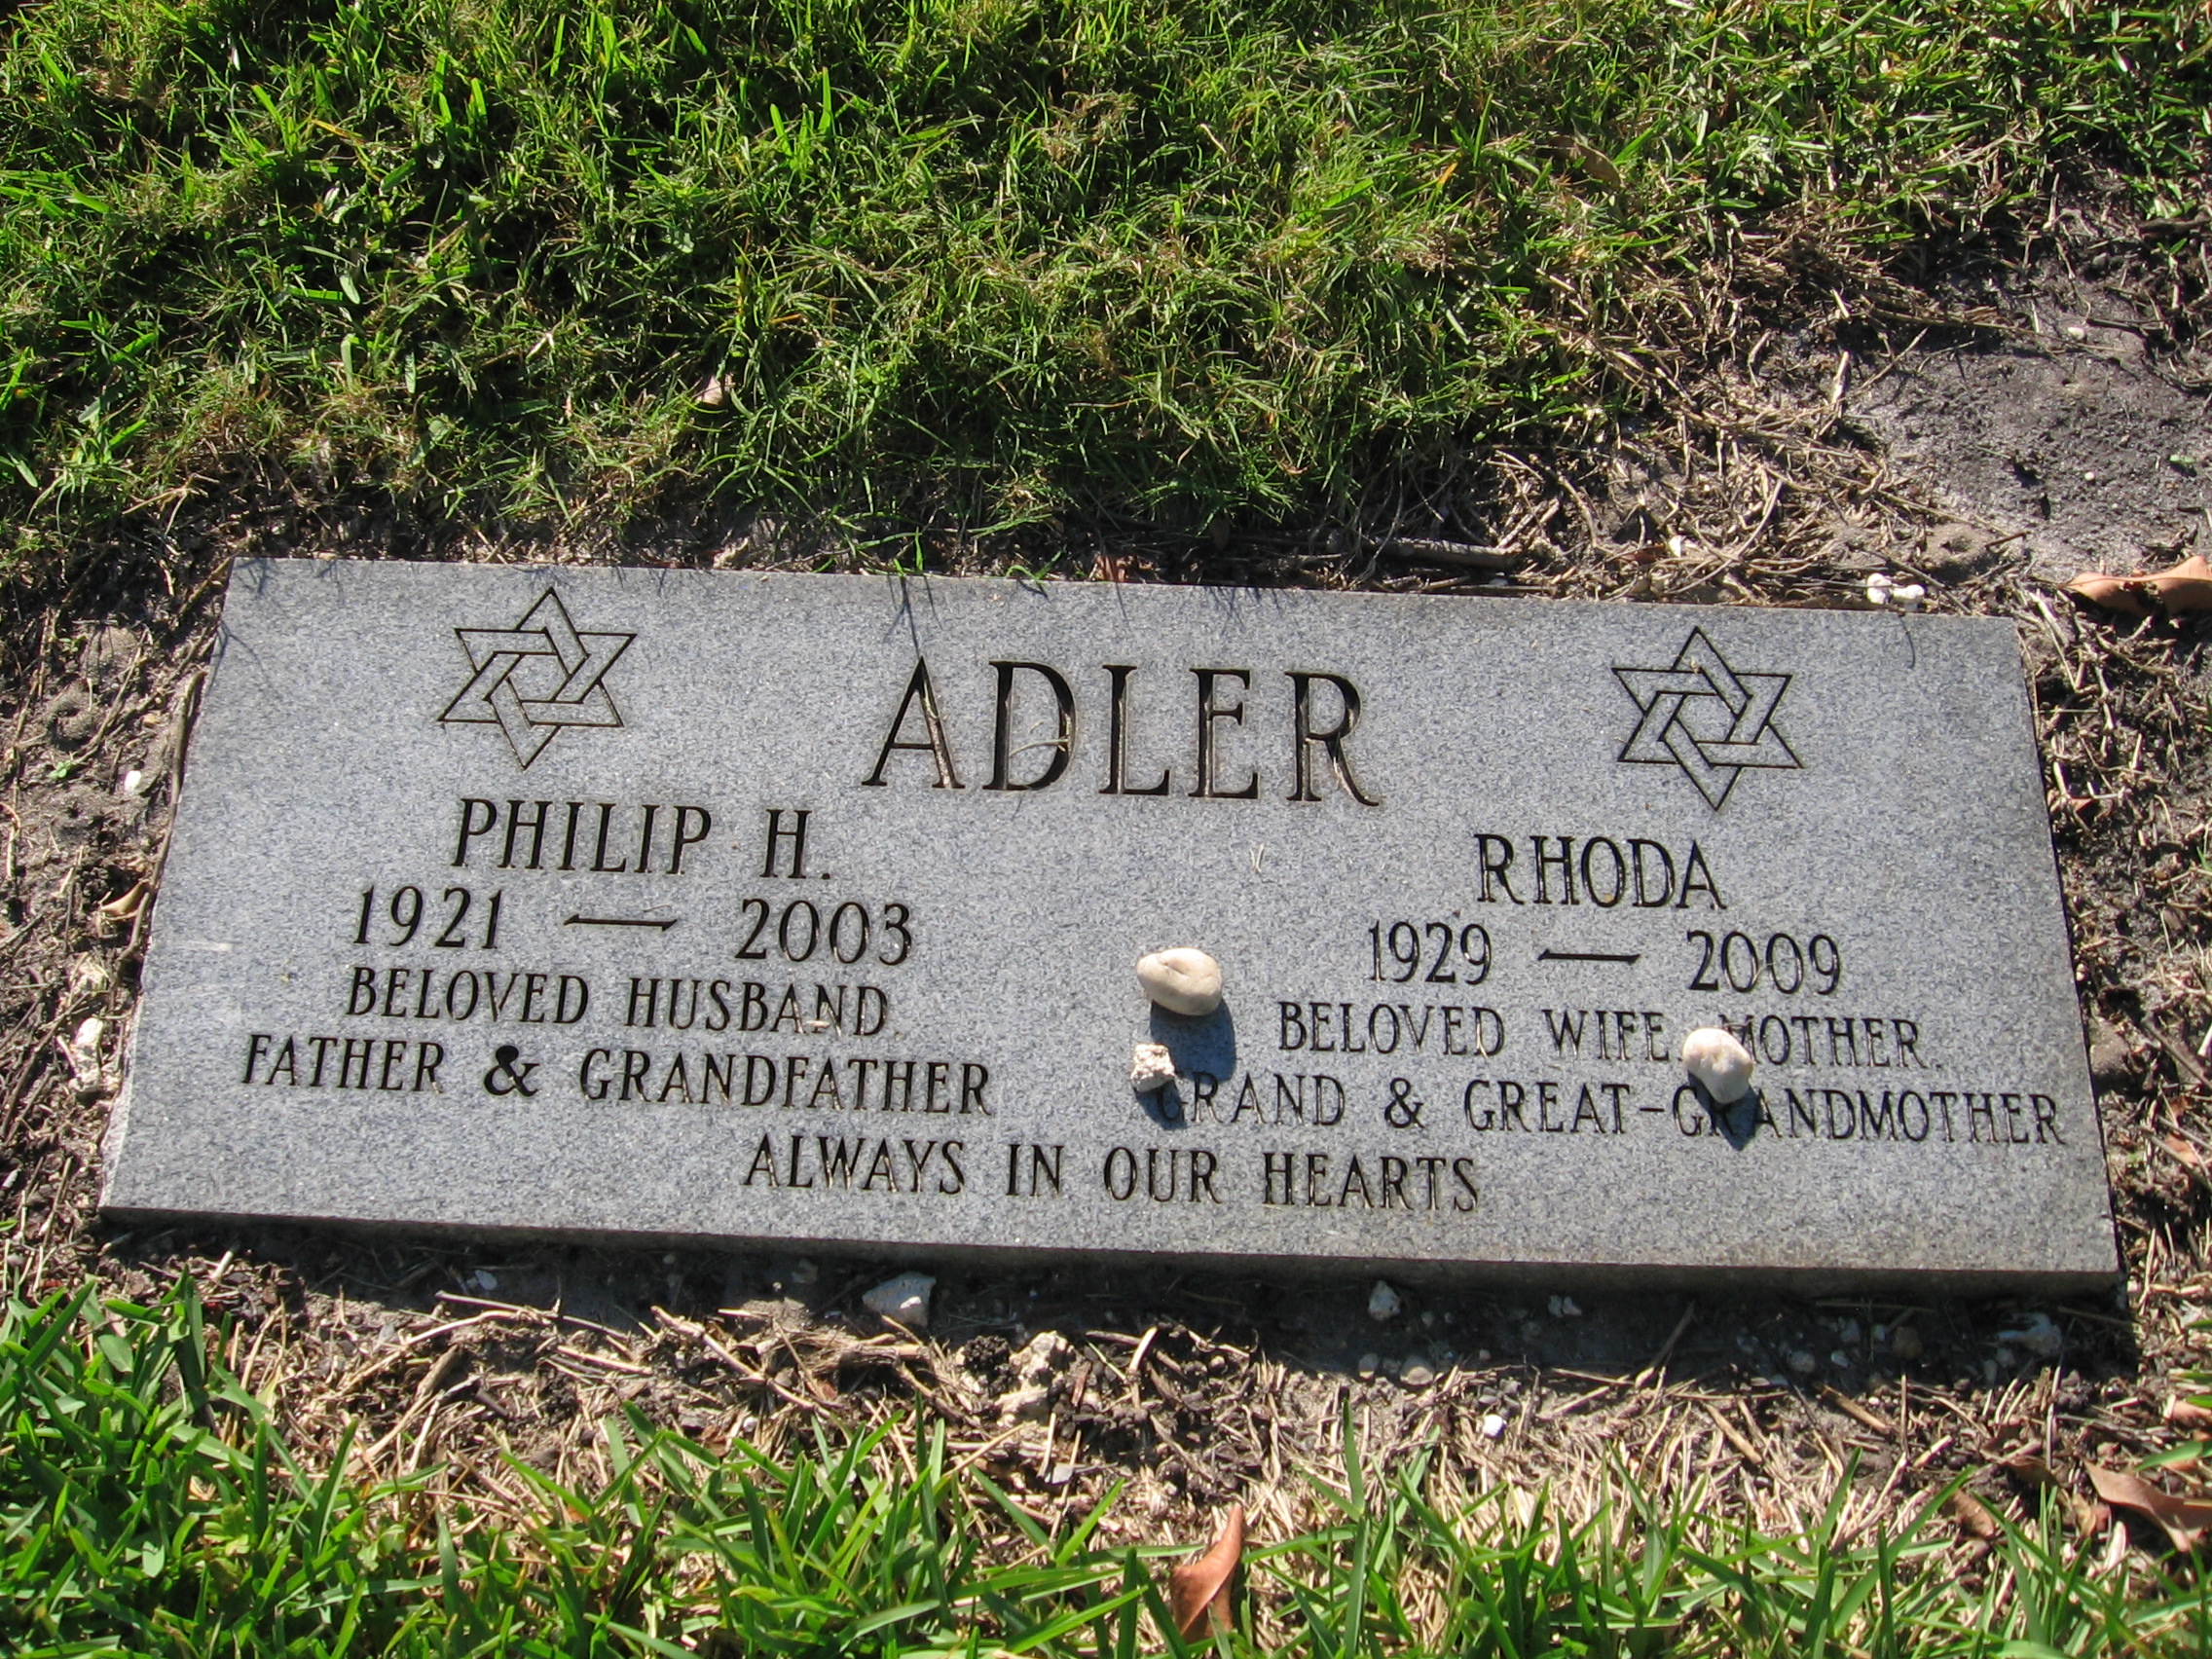 Philip H Adler